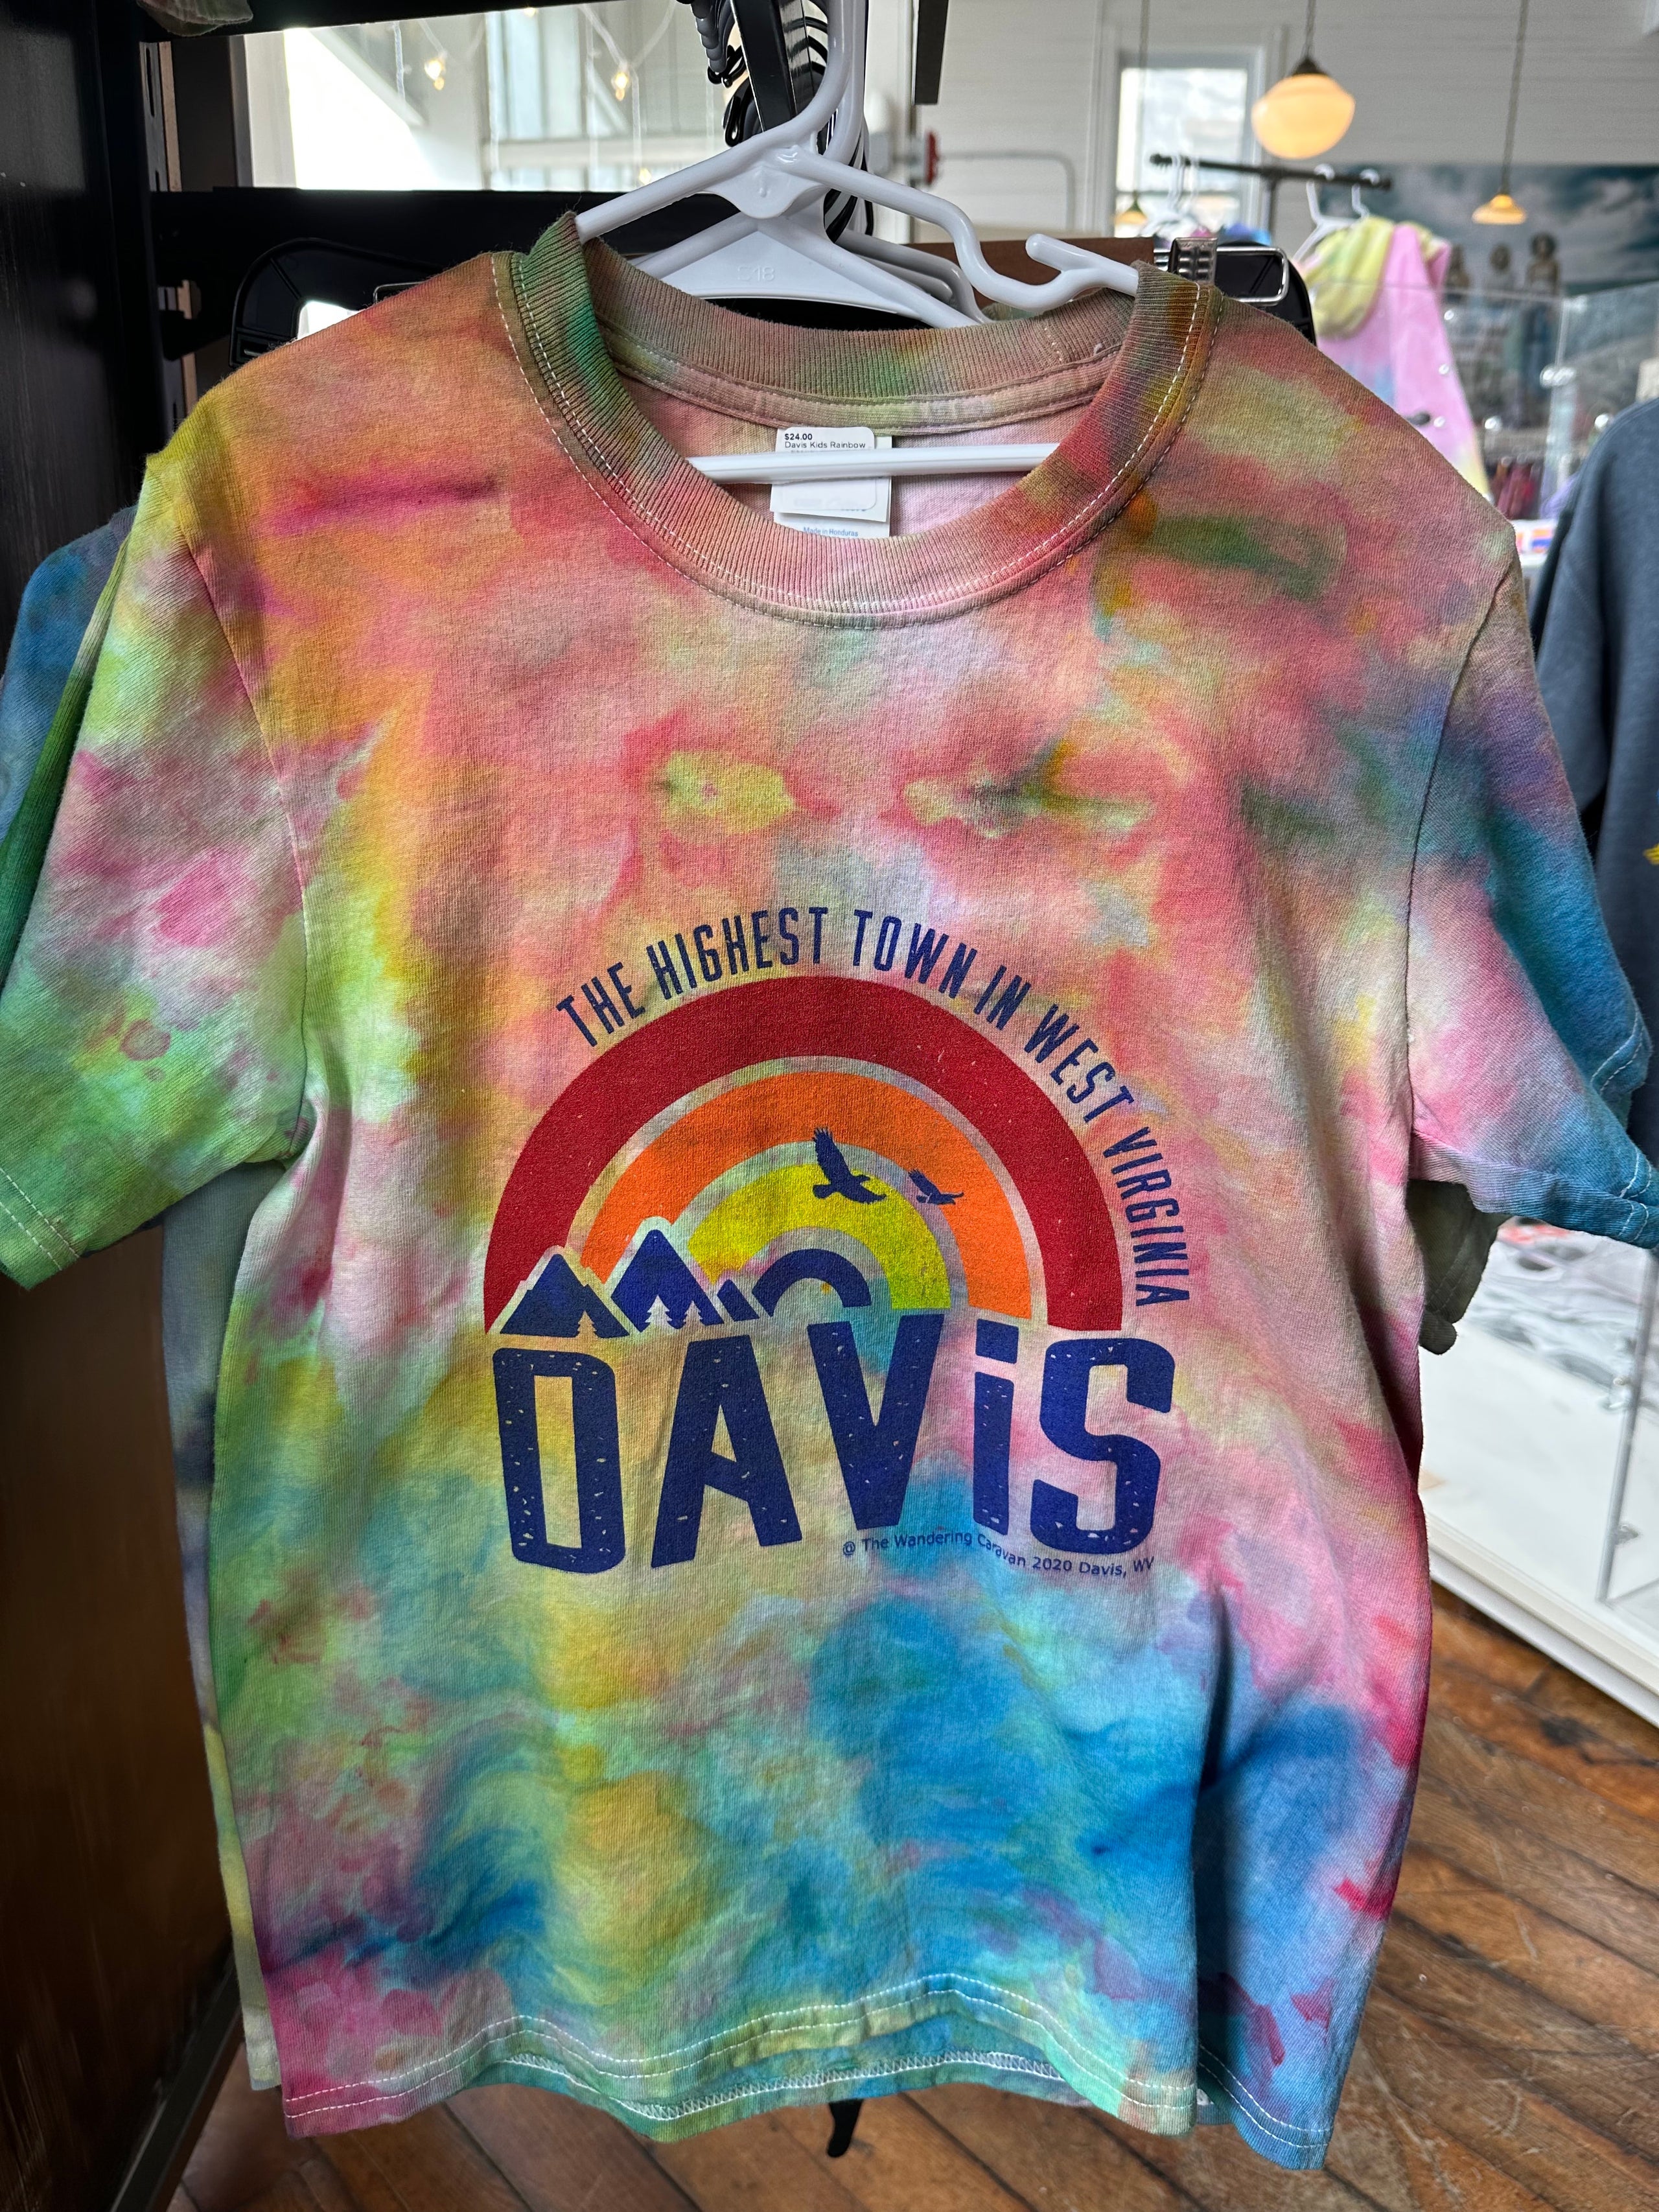 Rainbow Tie Dye Galaxy Dress - Vancouver's Best Baby & Kids Store